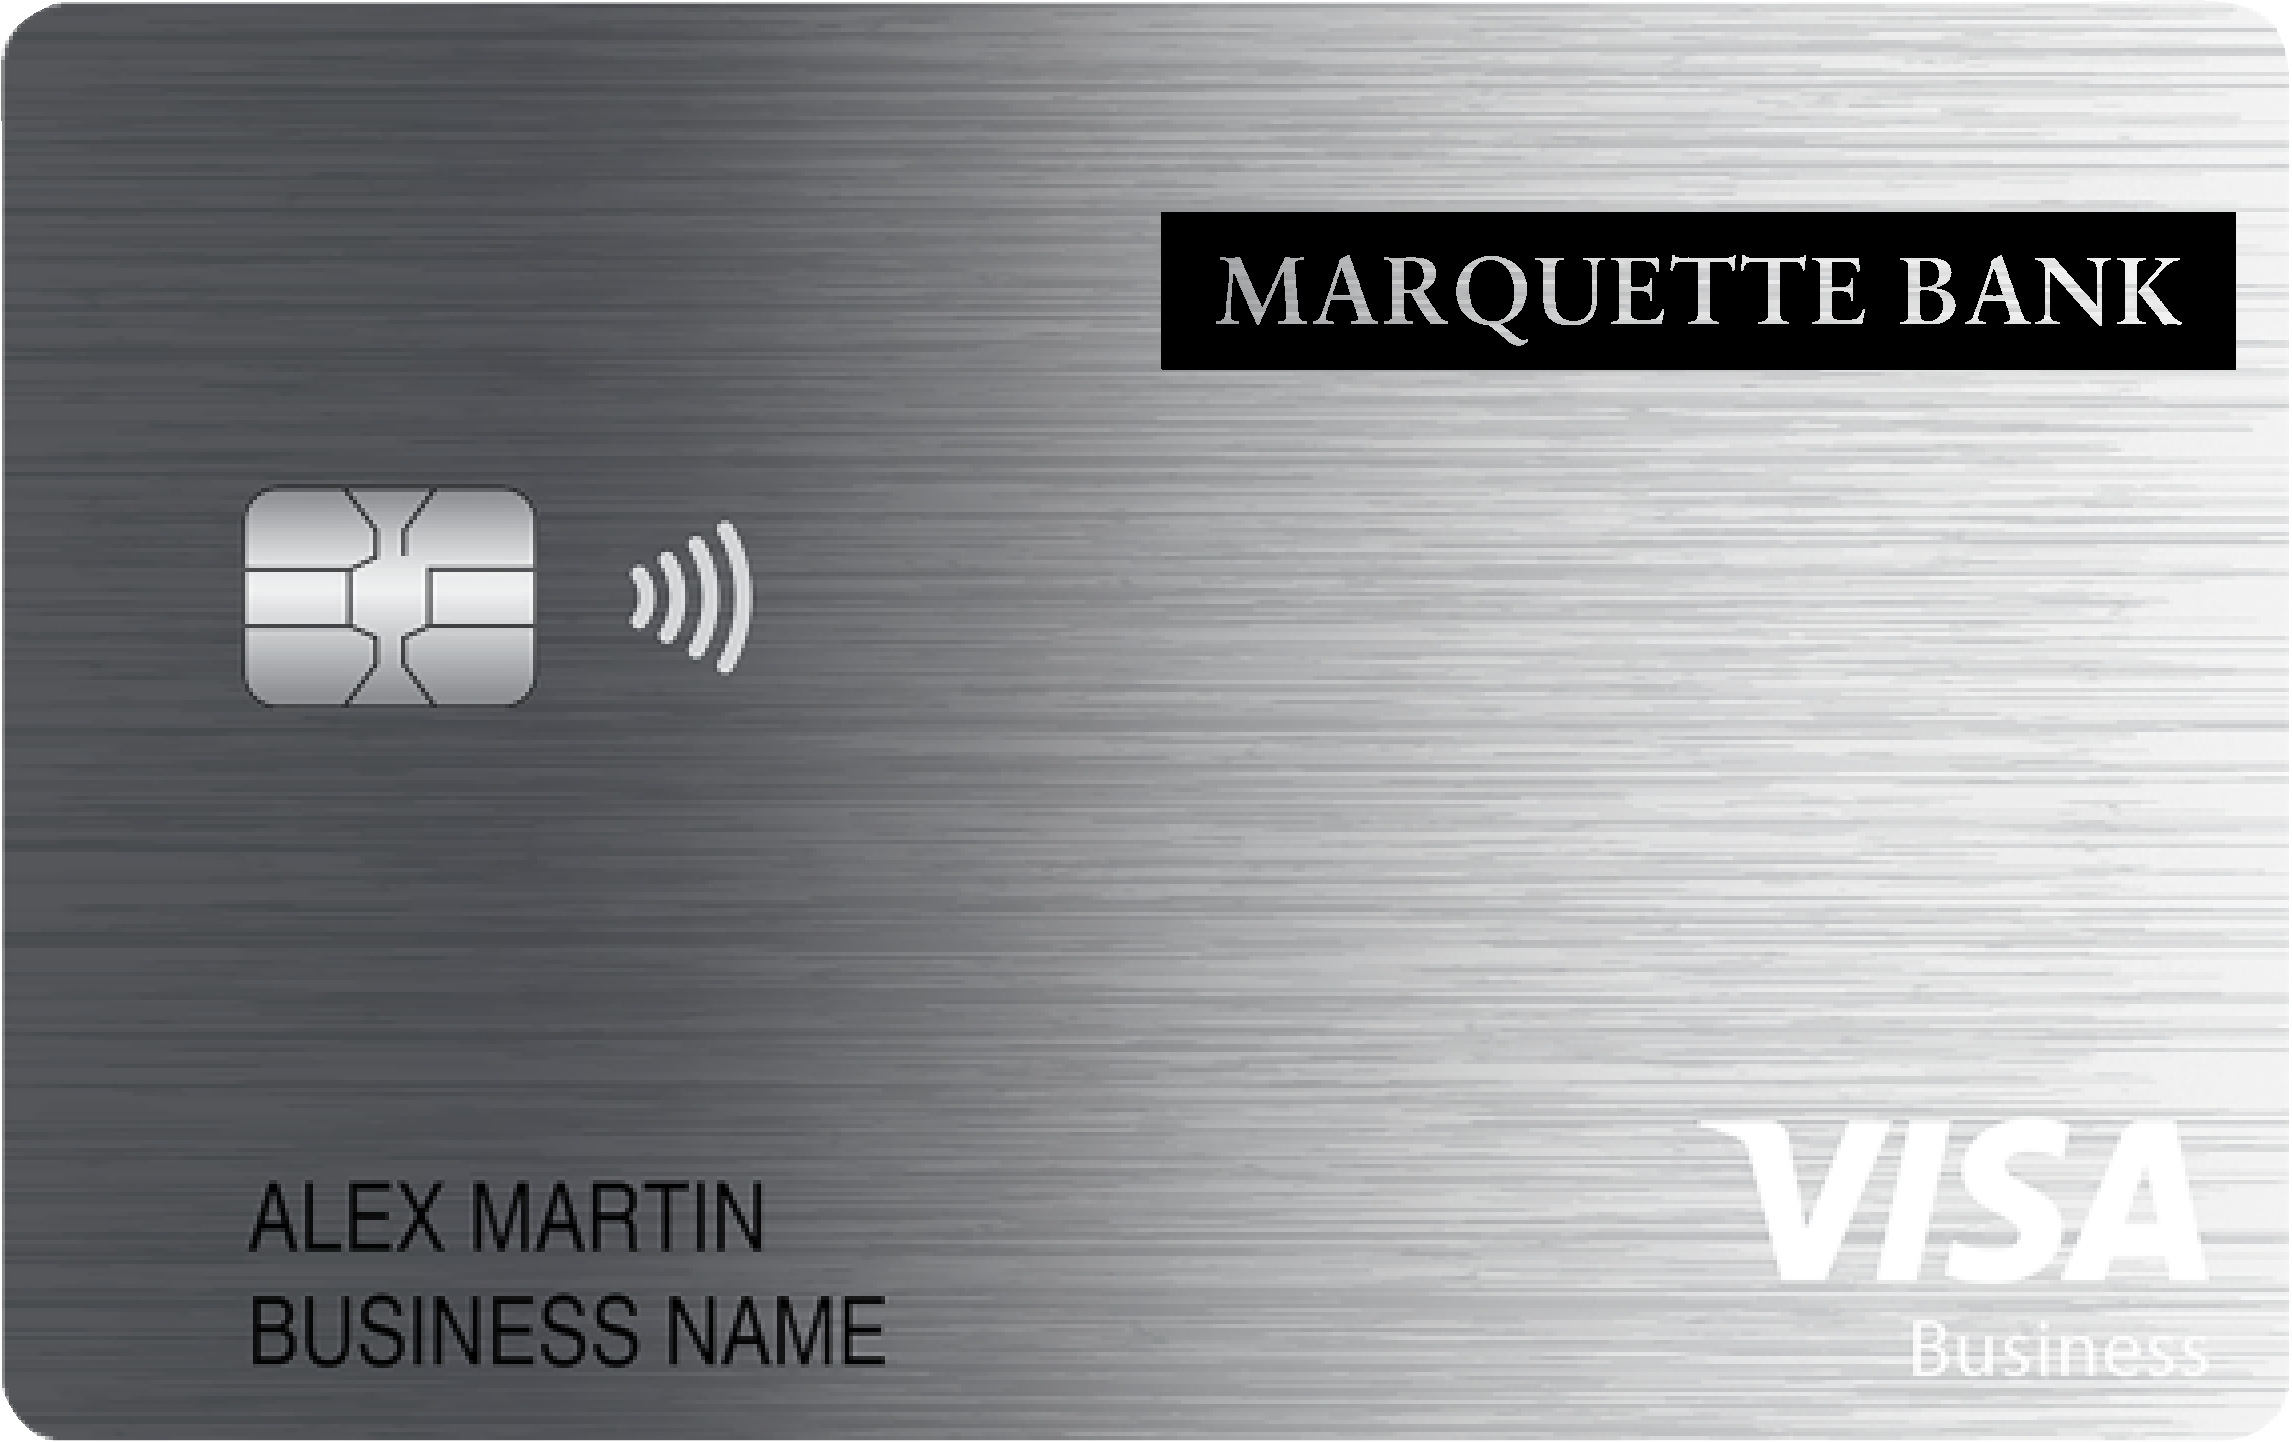 Marquette Bank